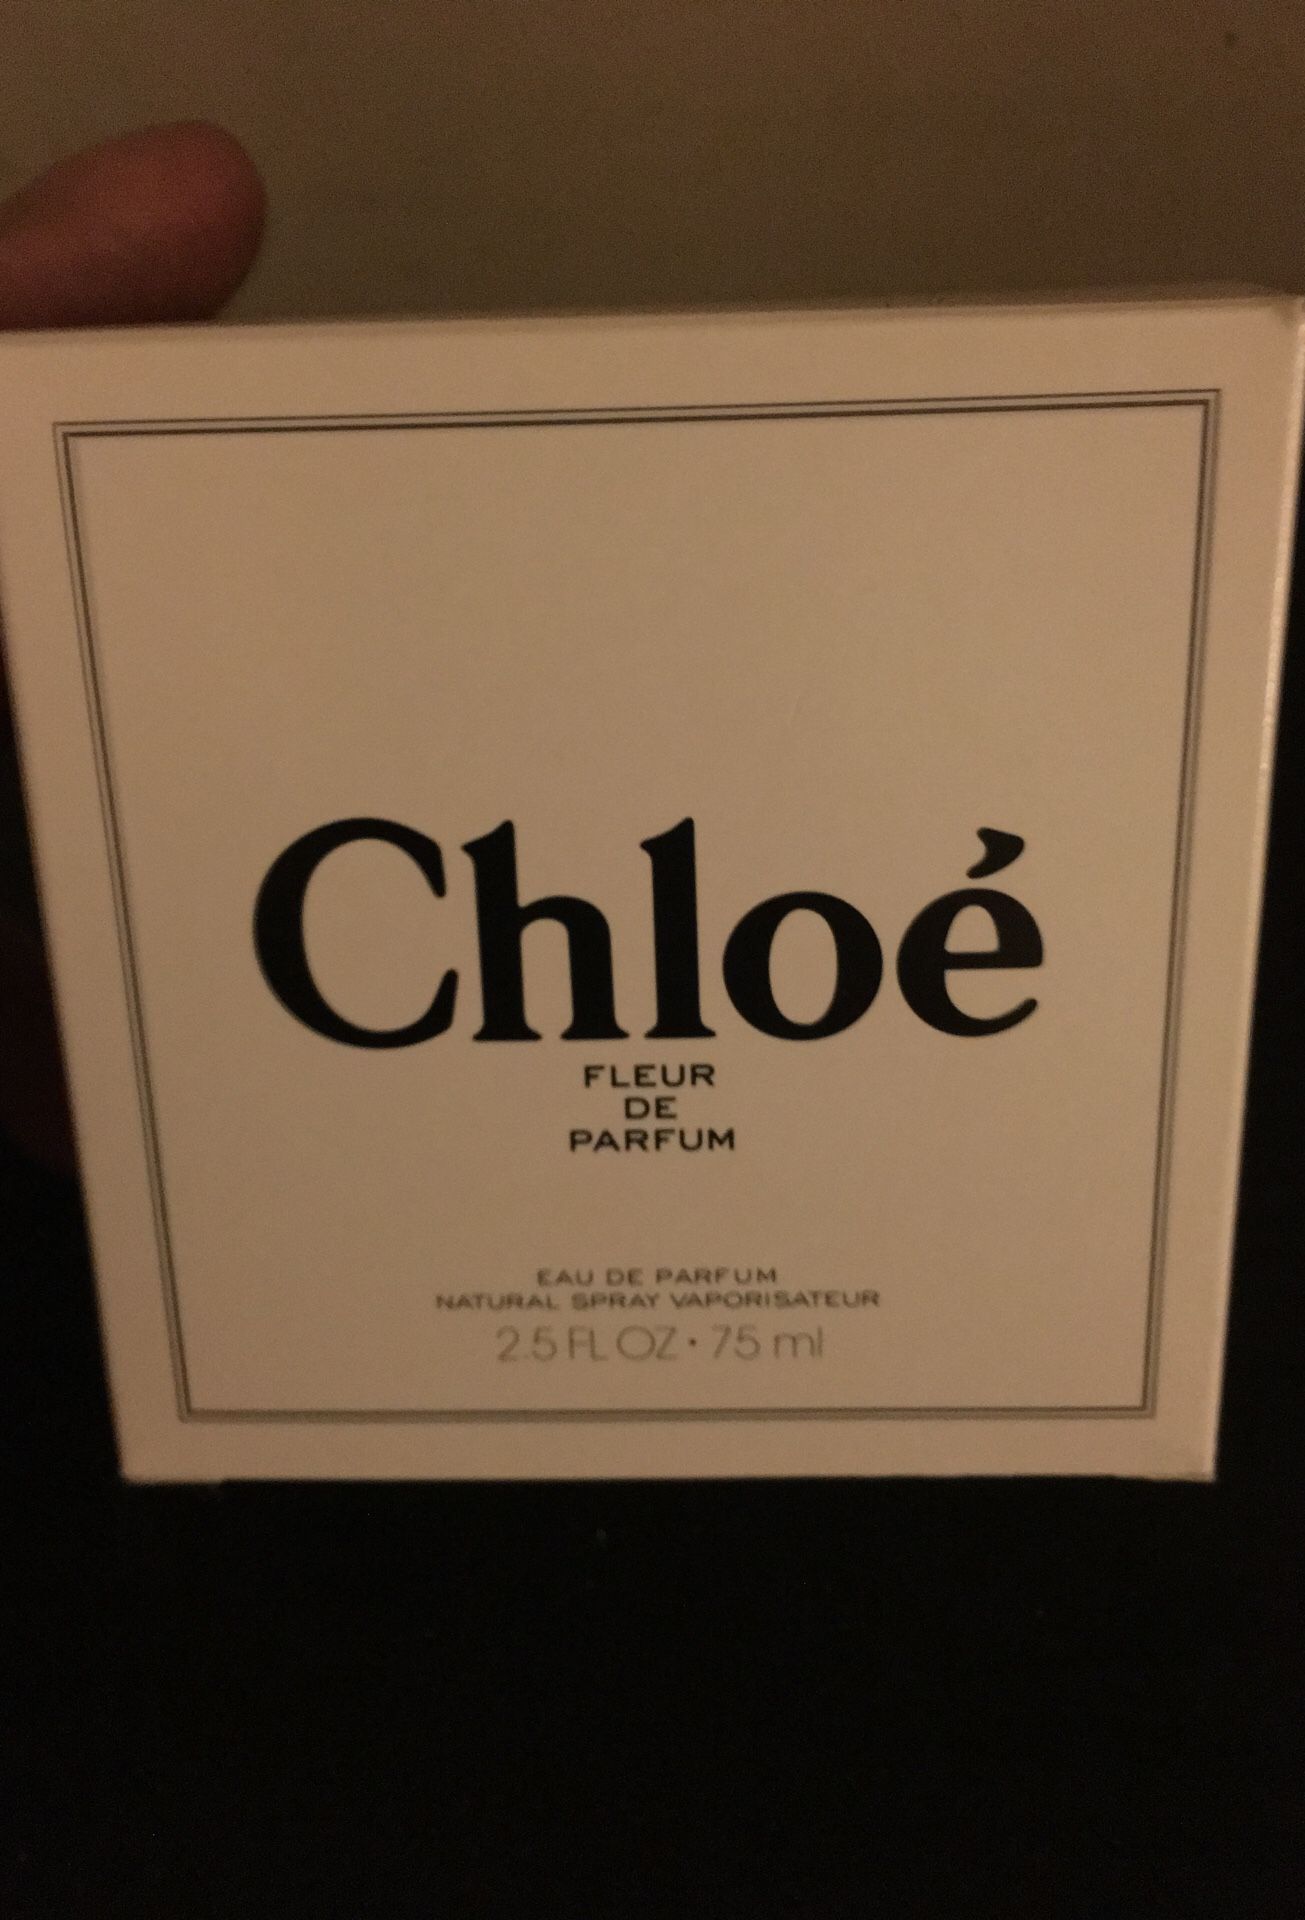 Chloe perfume 2.5fl oz